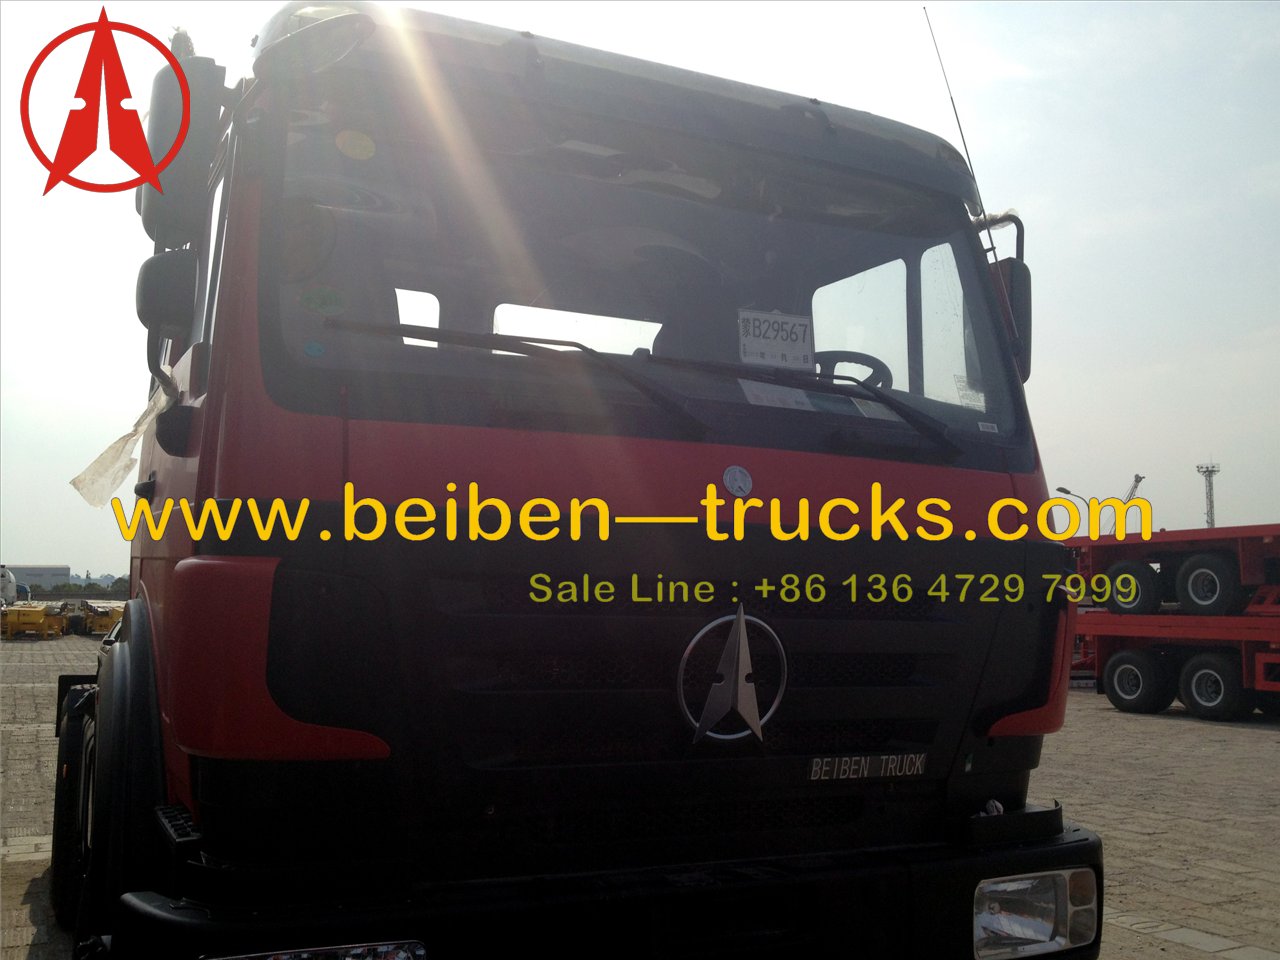 angola beiben 2638 tractor truck supplier